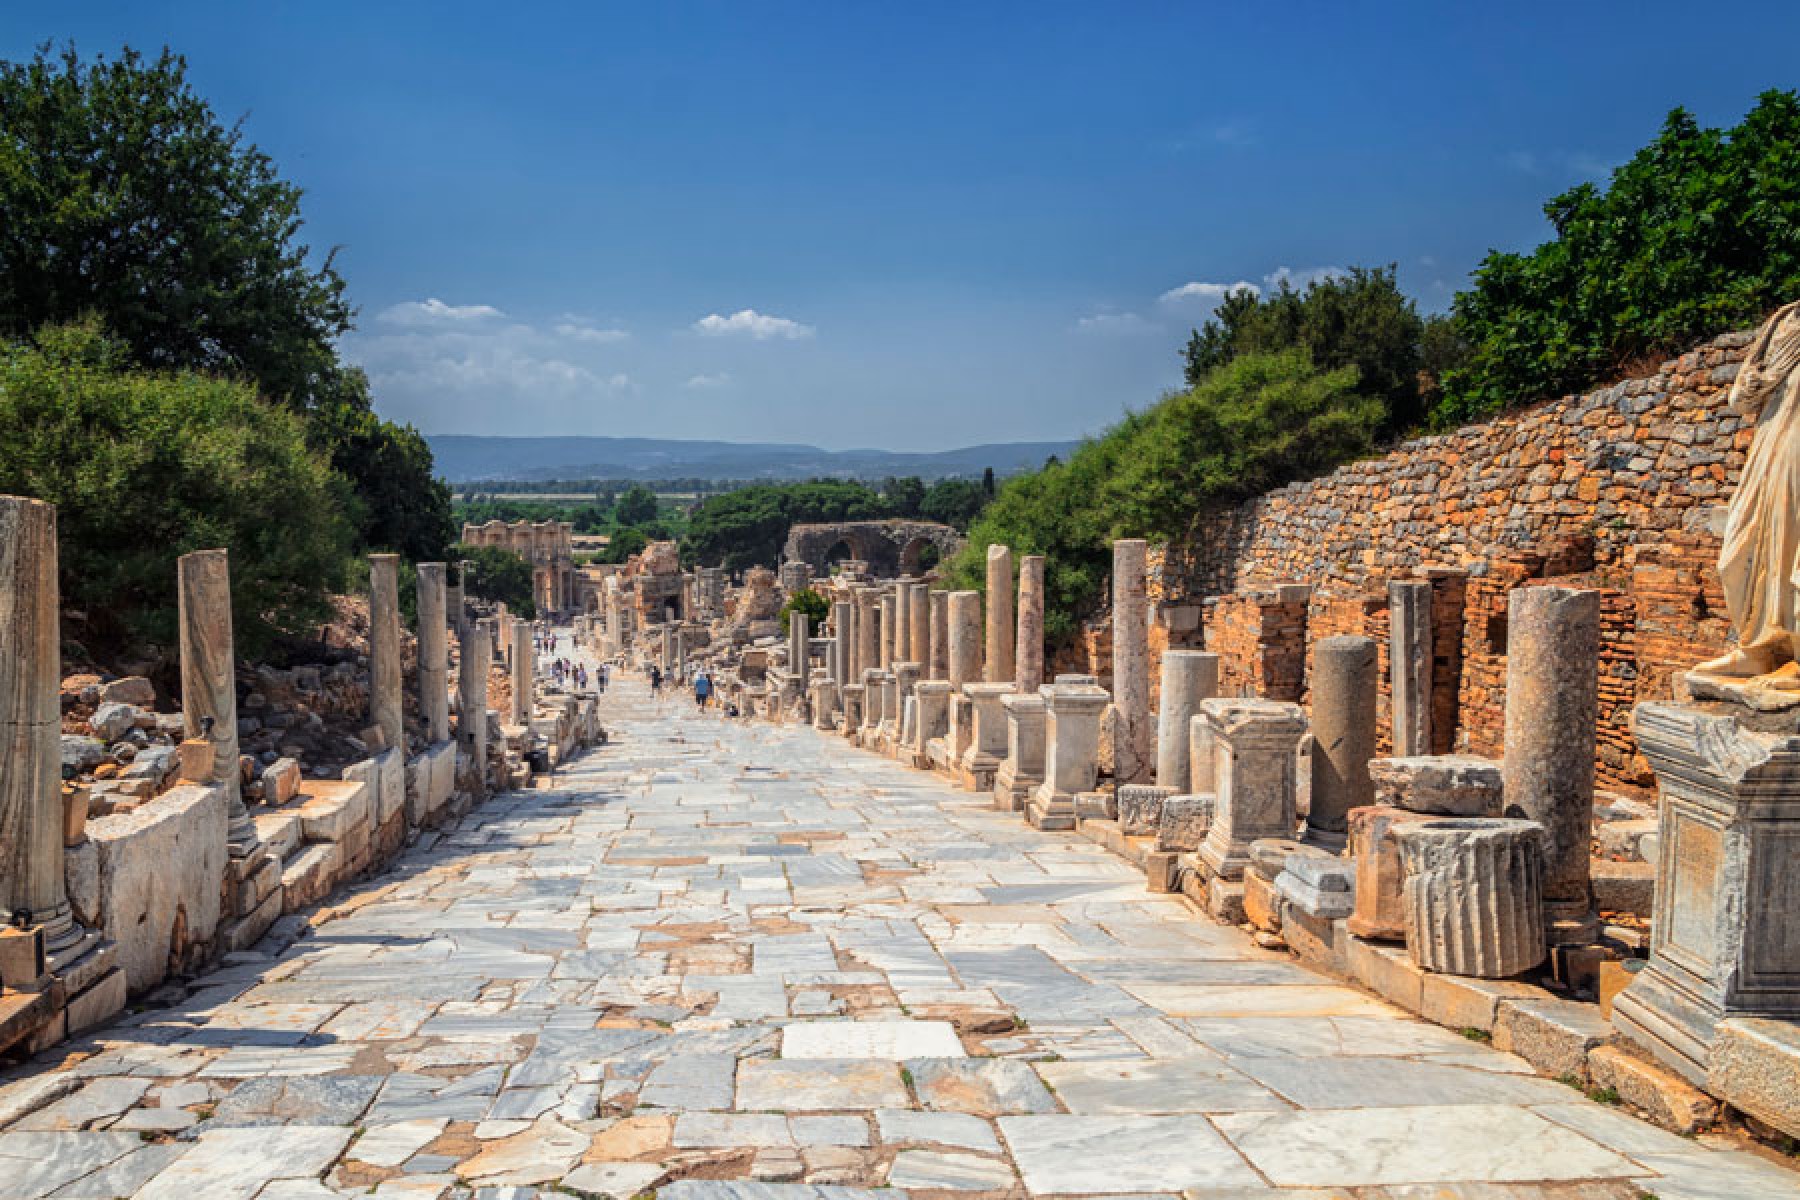 Ephesus: An Ancient Greco-Roman City in present-day Turkey